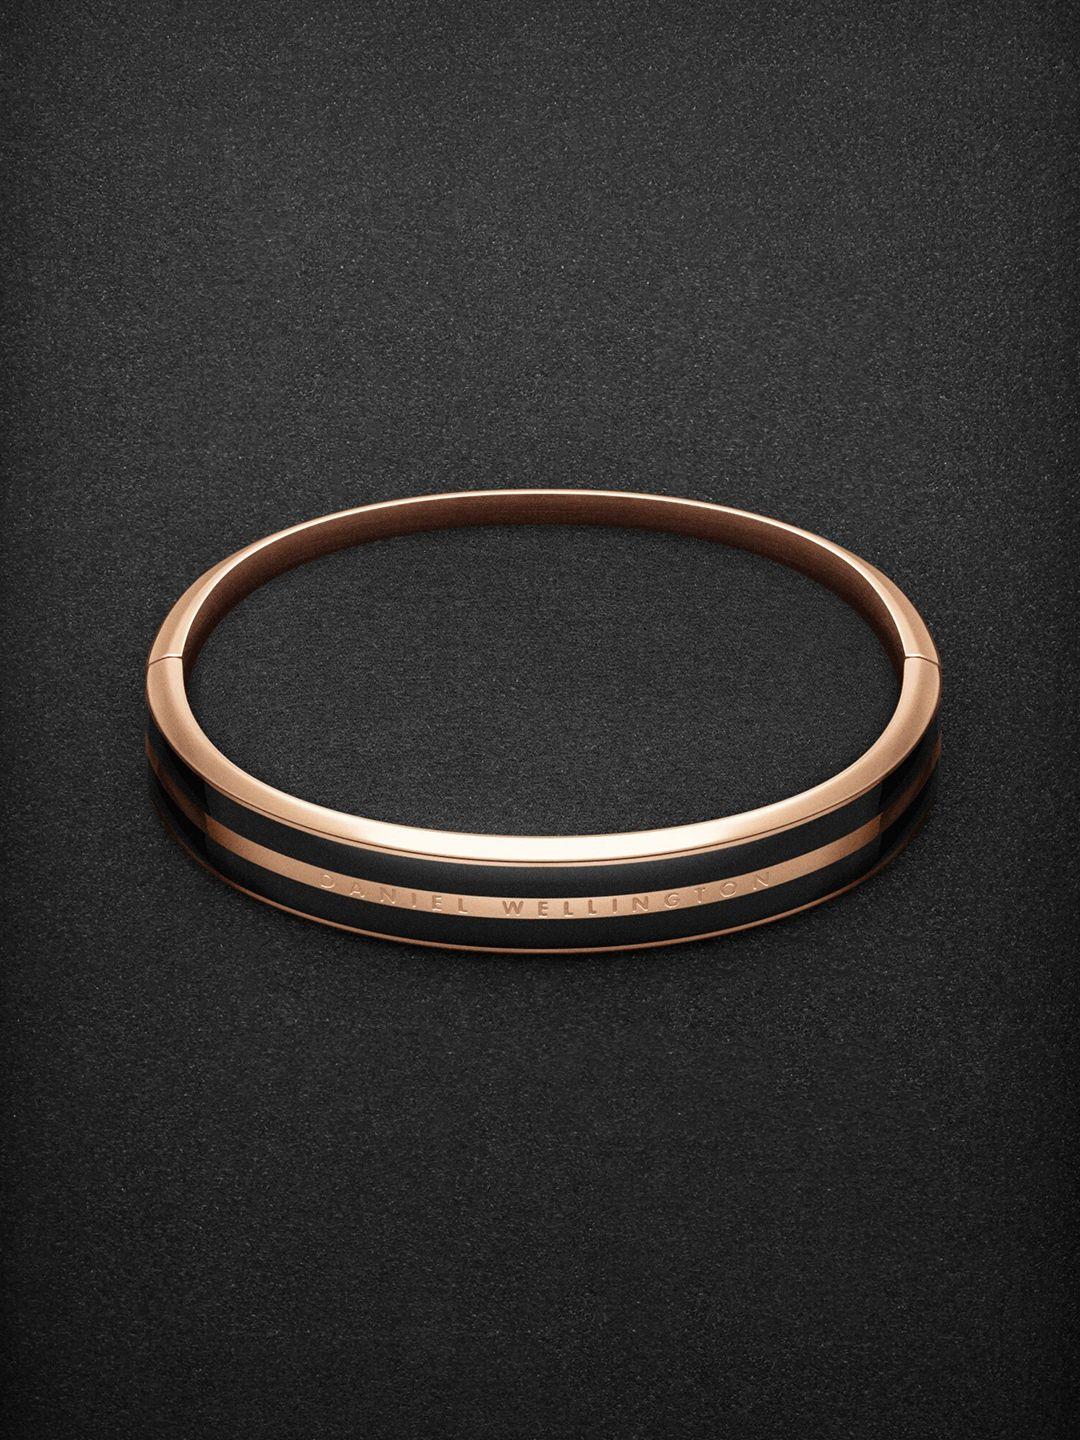 daniel wellington rose gold-plated cuff bracelet